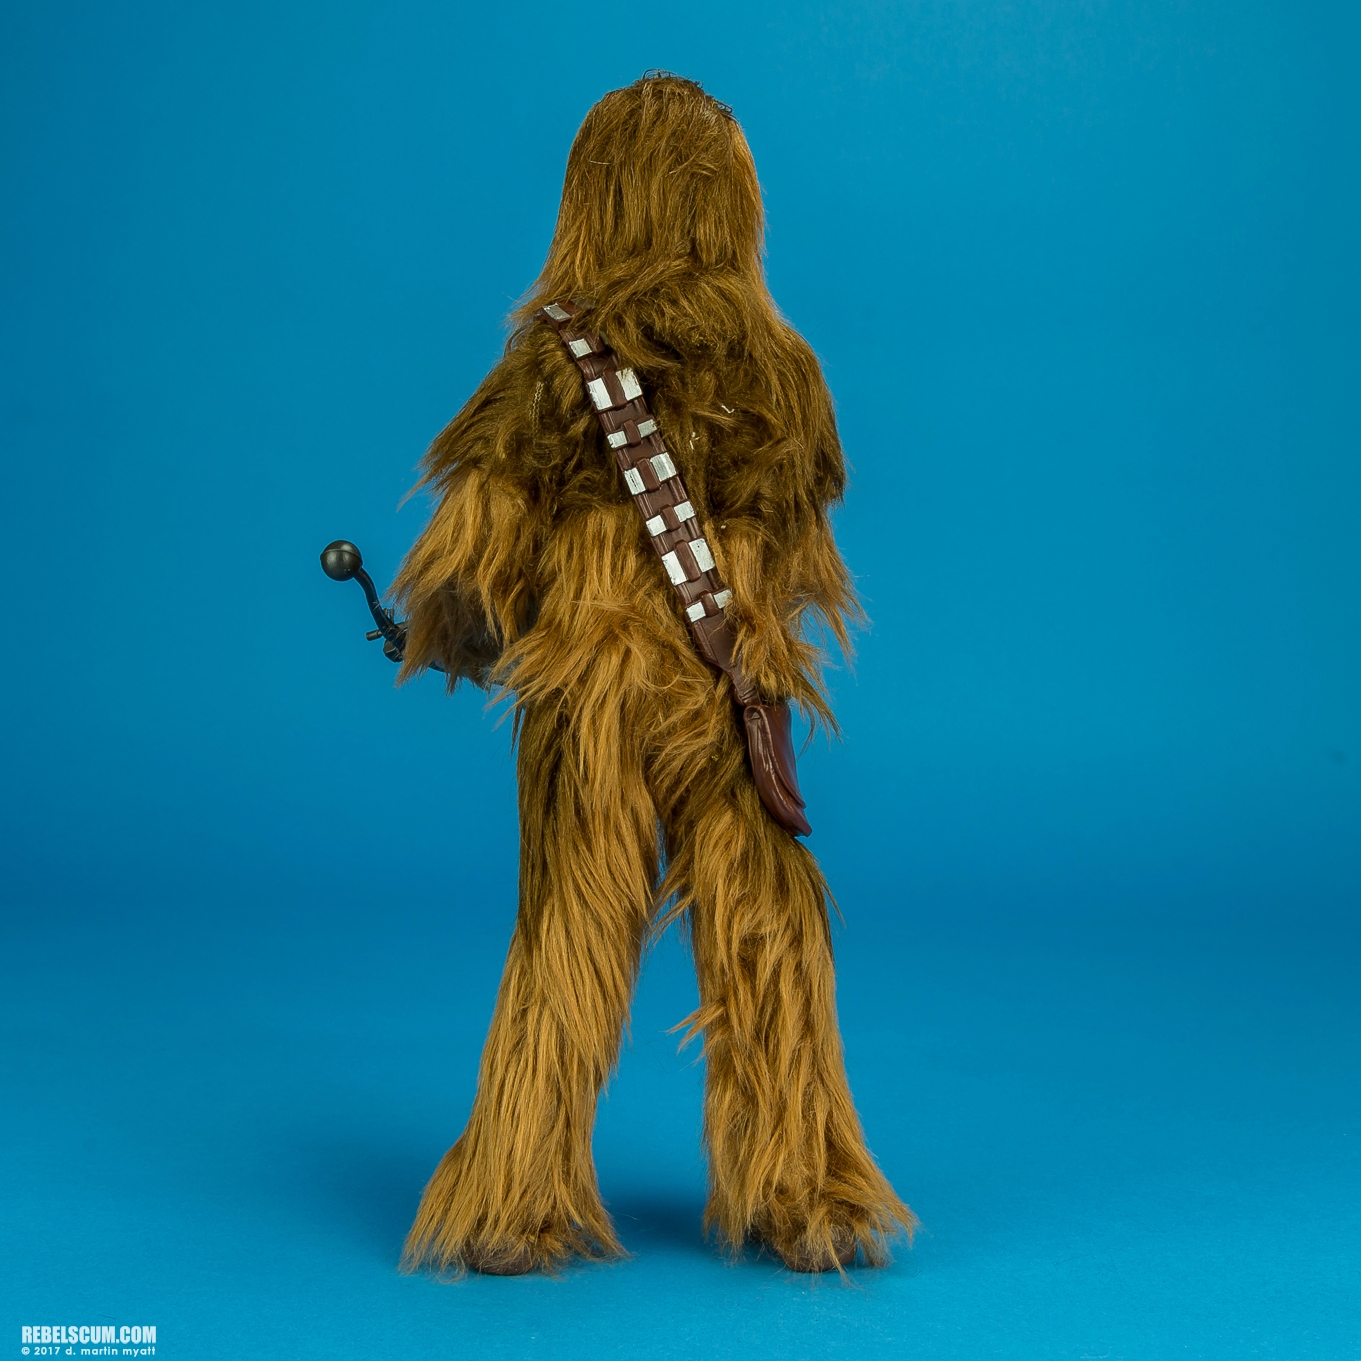 Chewbacca-Roaring-Star-Wars-Forces-of-Destiny-Hasbro-004.jpg